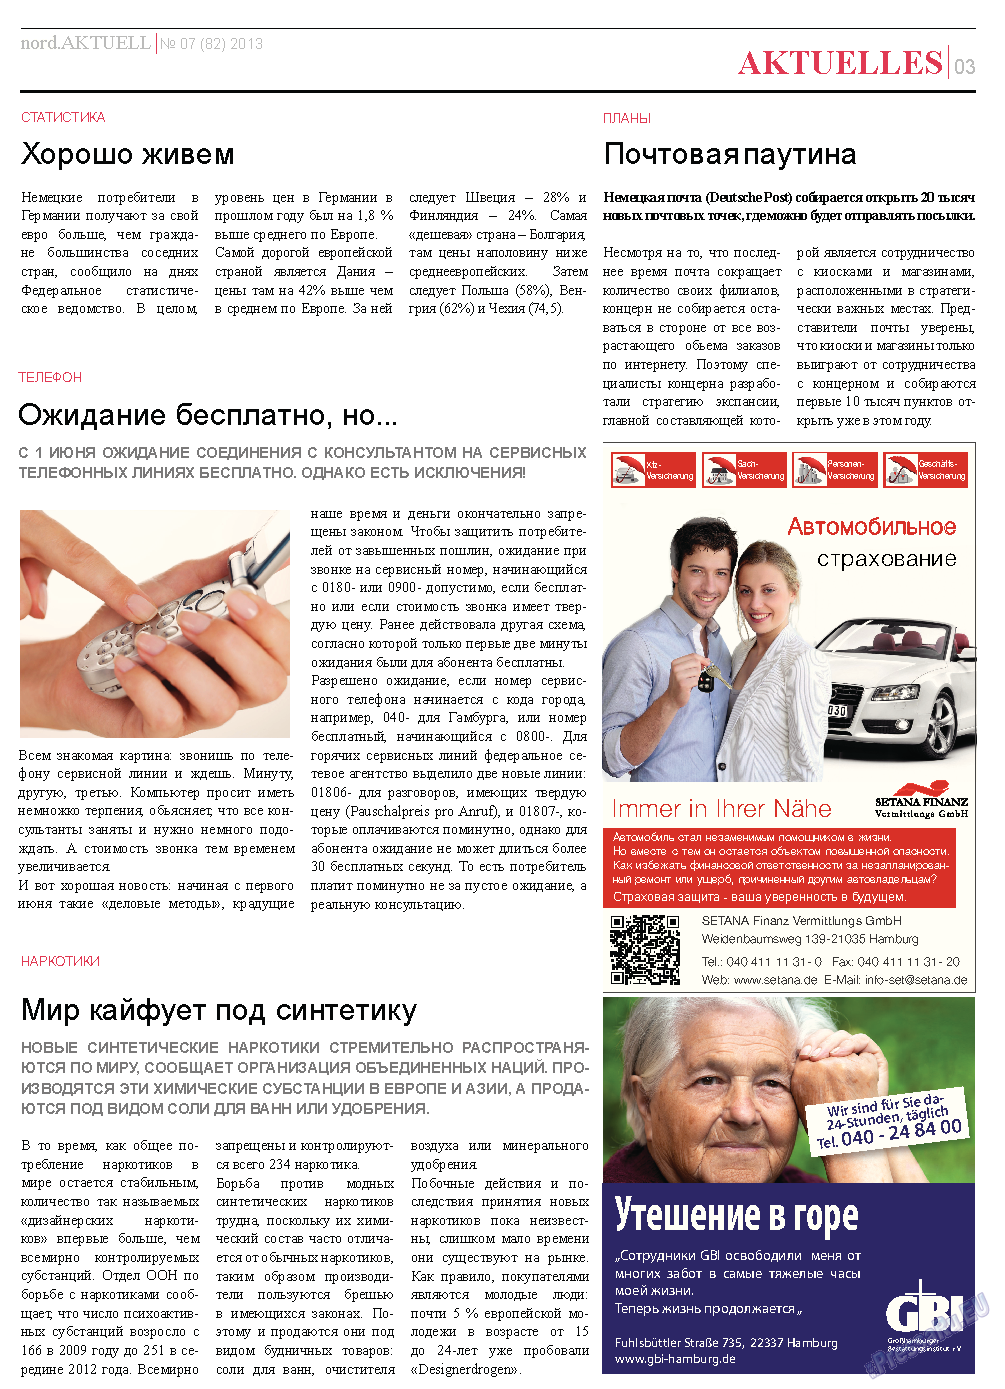 nord.Aktuell (газета). 2013 год, номер 7, стр. 3